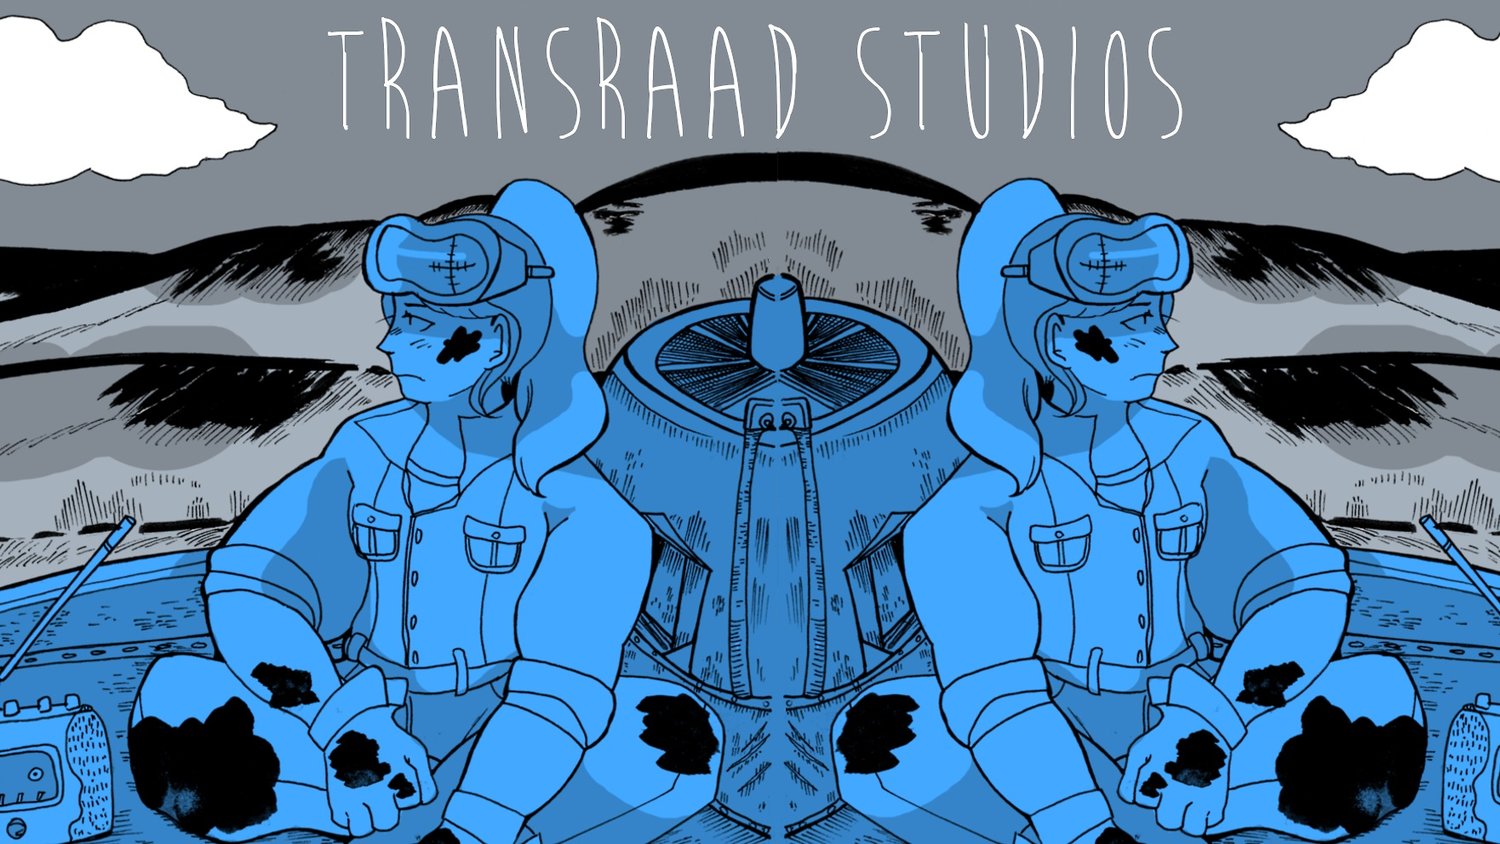 Transraad Studios